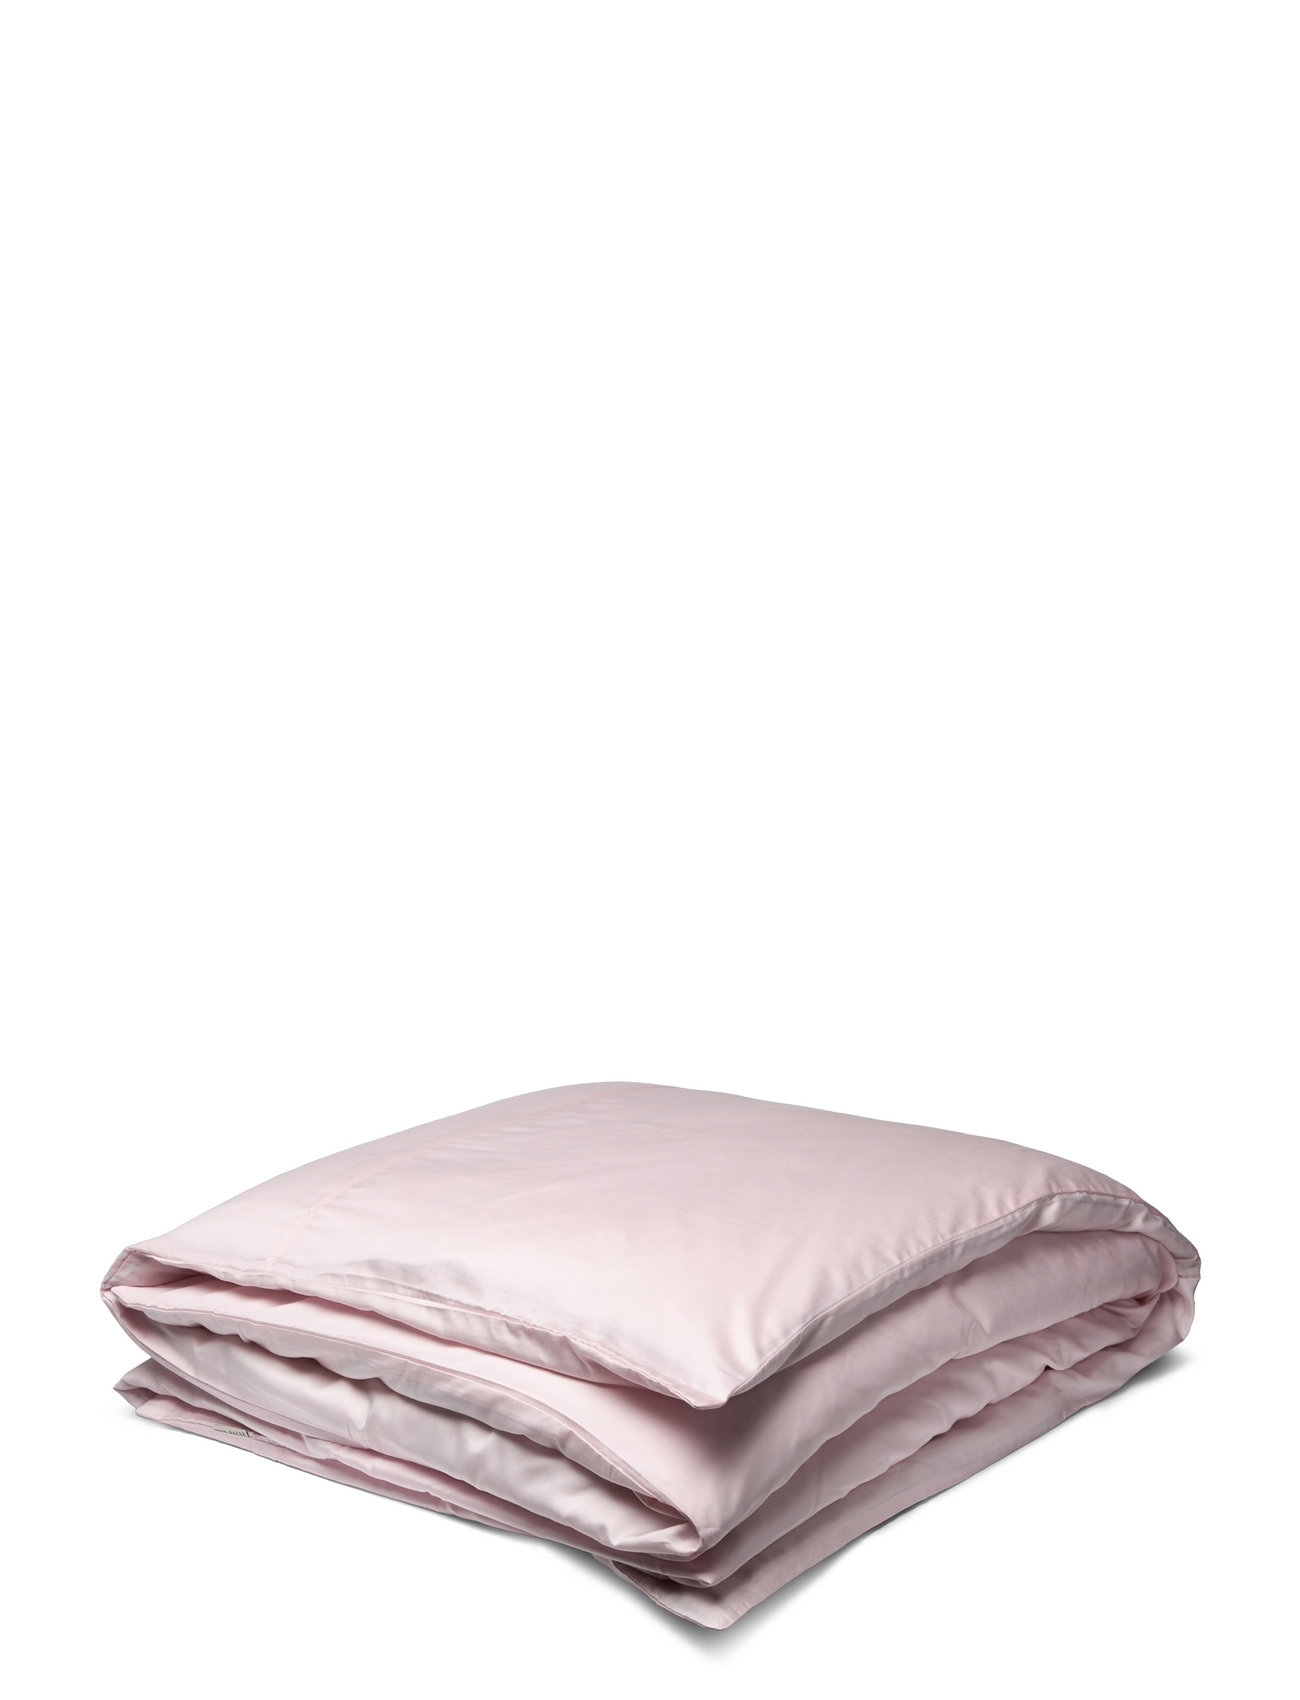 Double Duvet Cover Plain Dye Home Textiles Bedtextiles Duvet Covers Pink Ted Baker